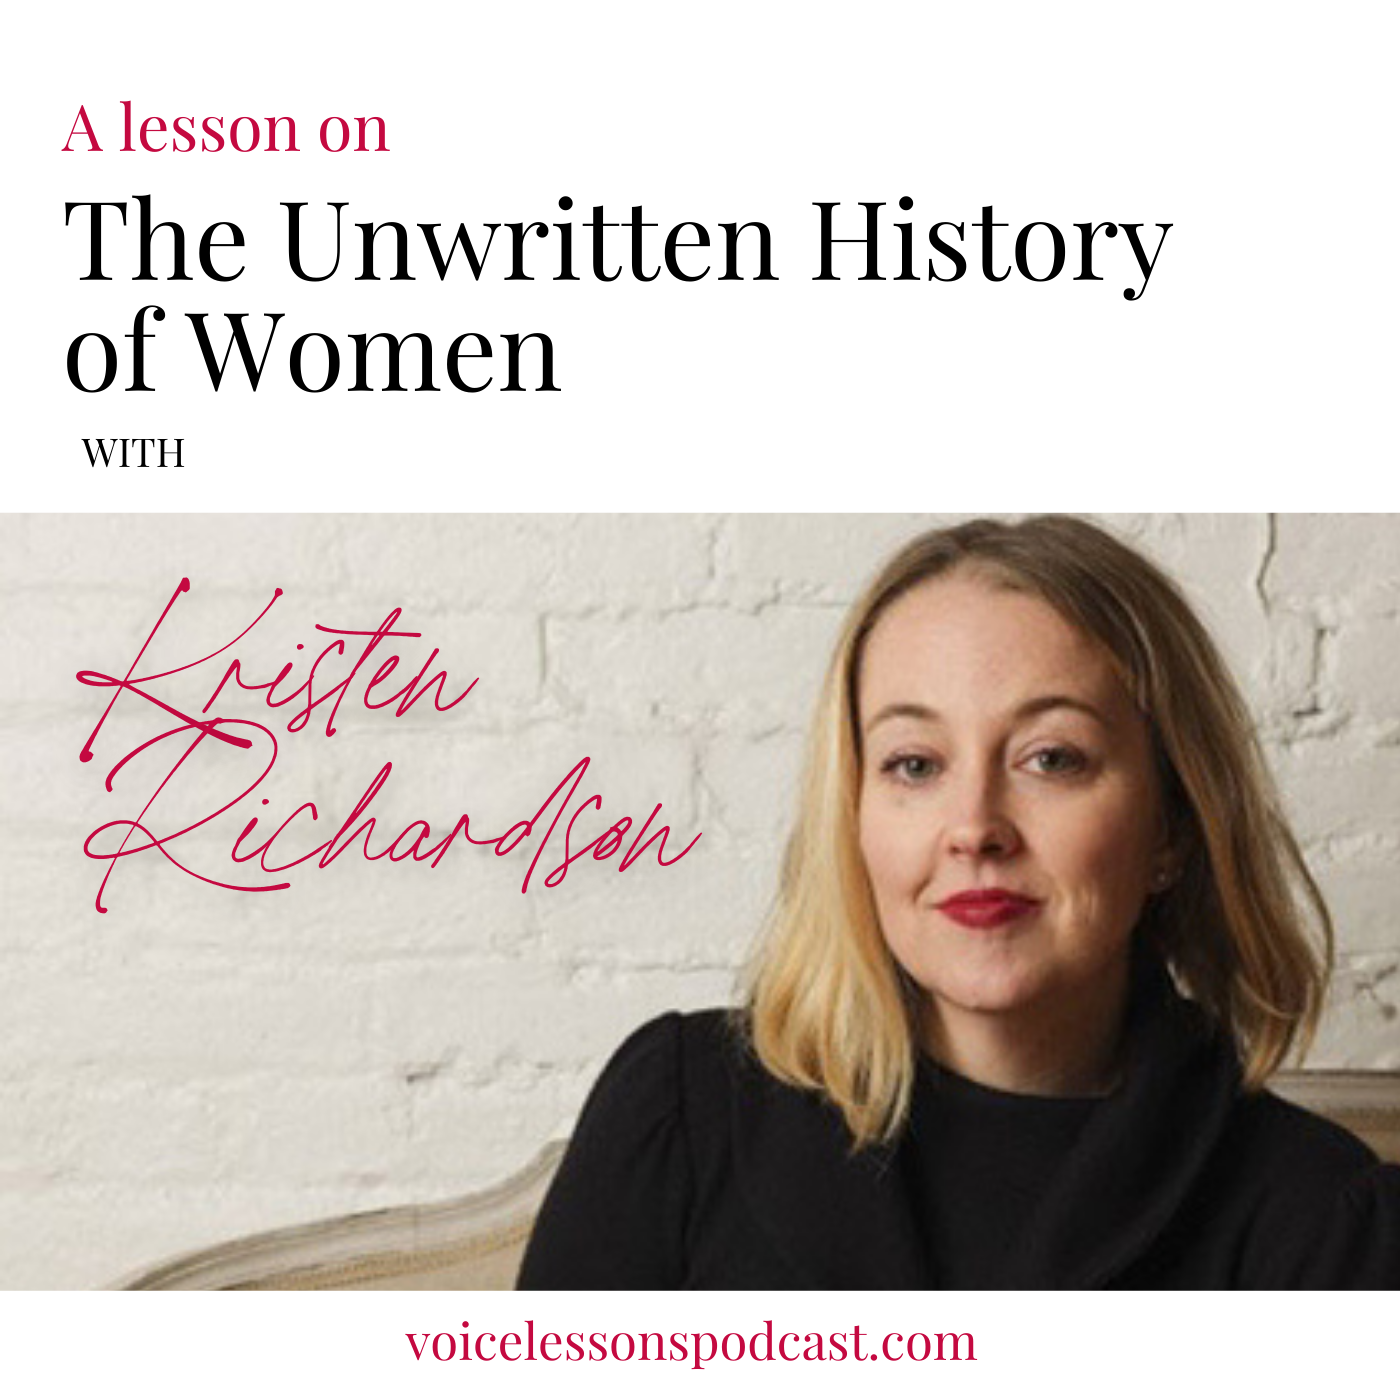 A_voice_lesson_on_the_unwritten_history_of_women_kristen_richardson